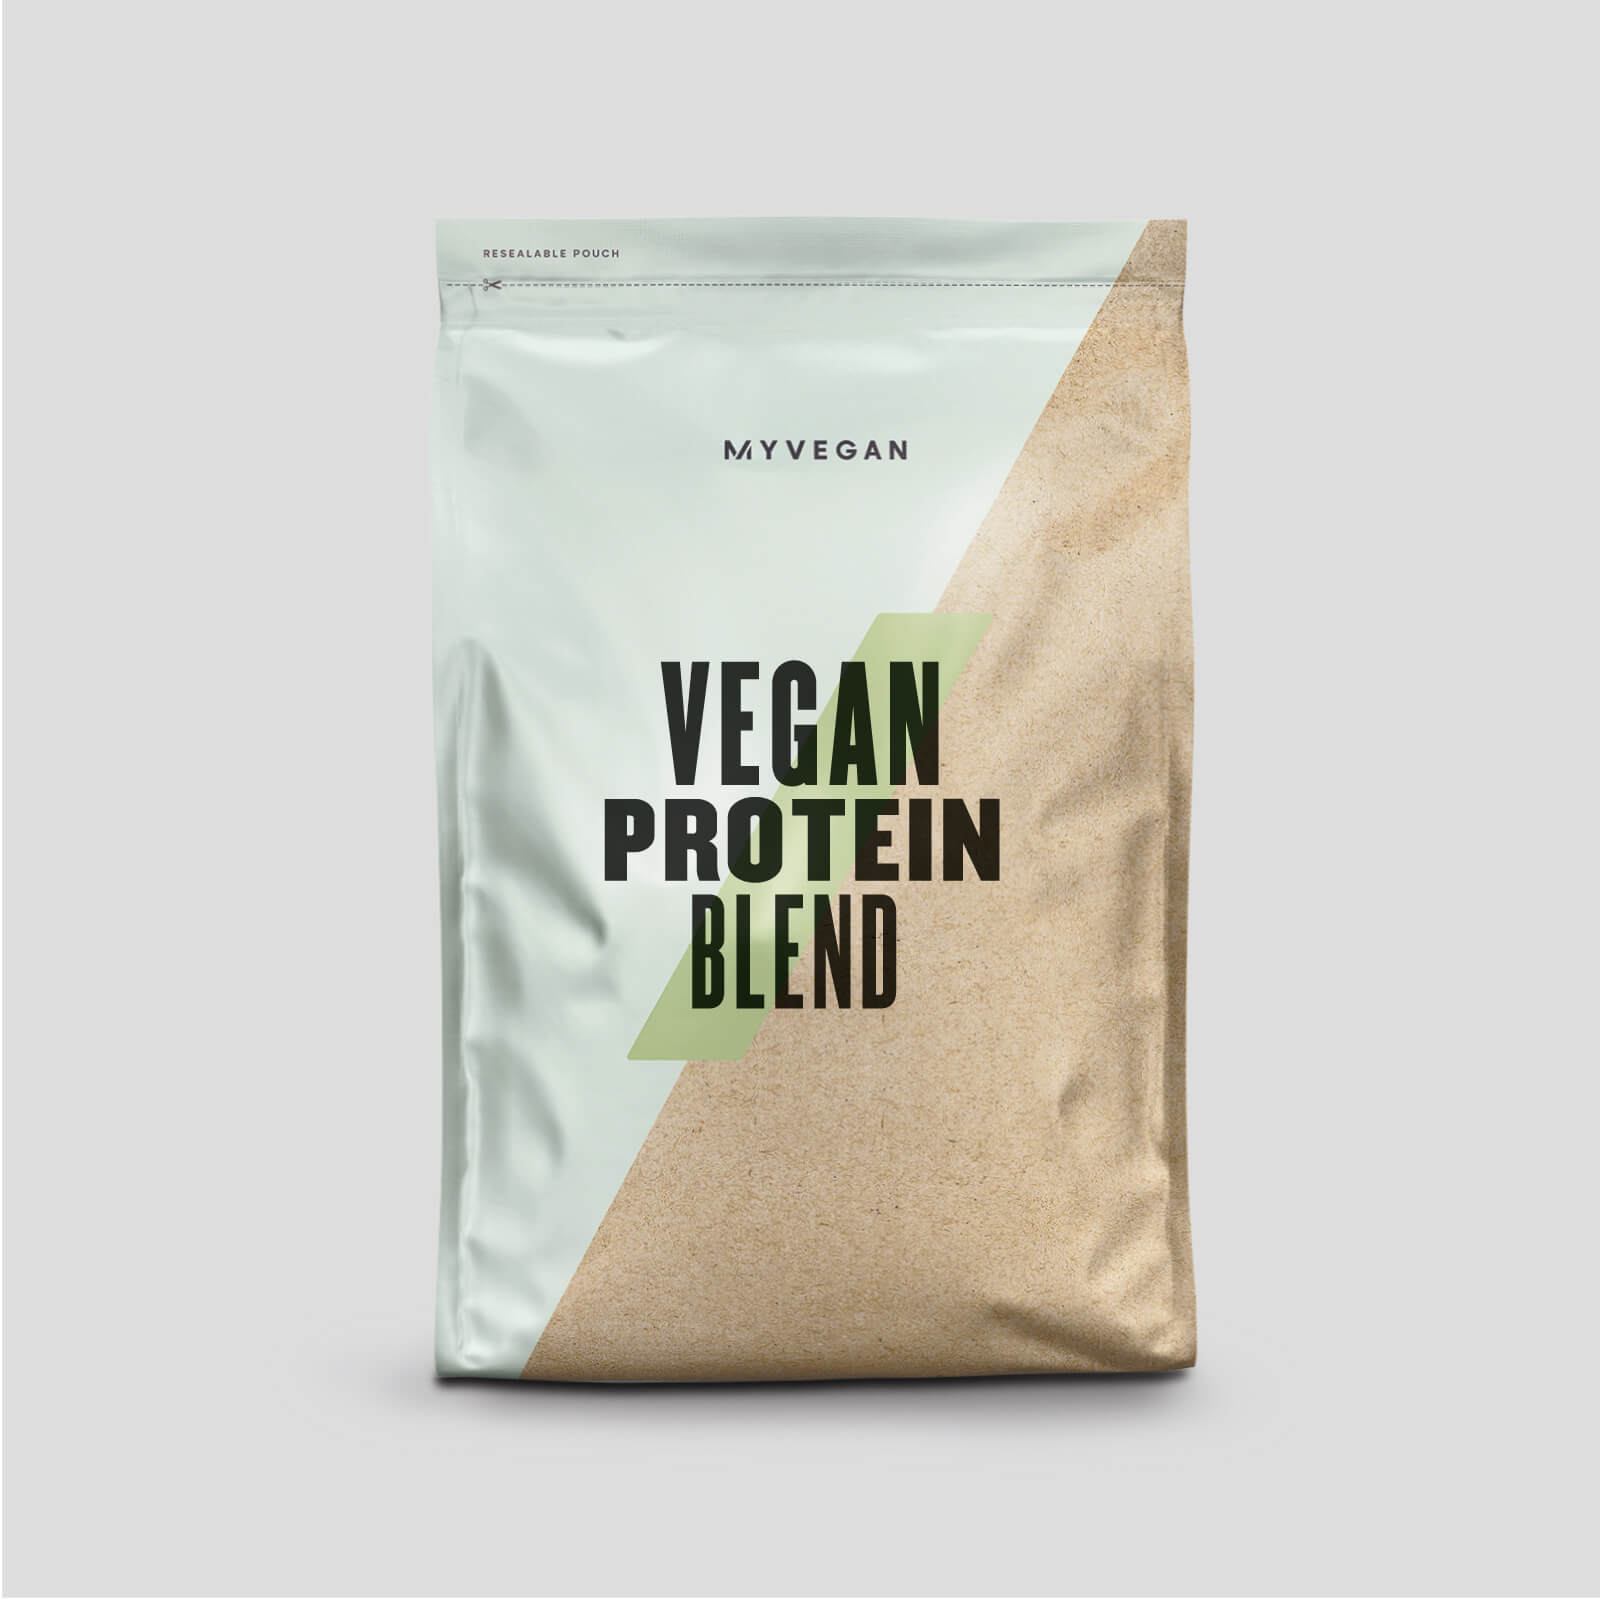 Myvegan Vegan Protein Blend - 1kg - White Chocolate Raspberry